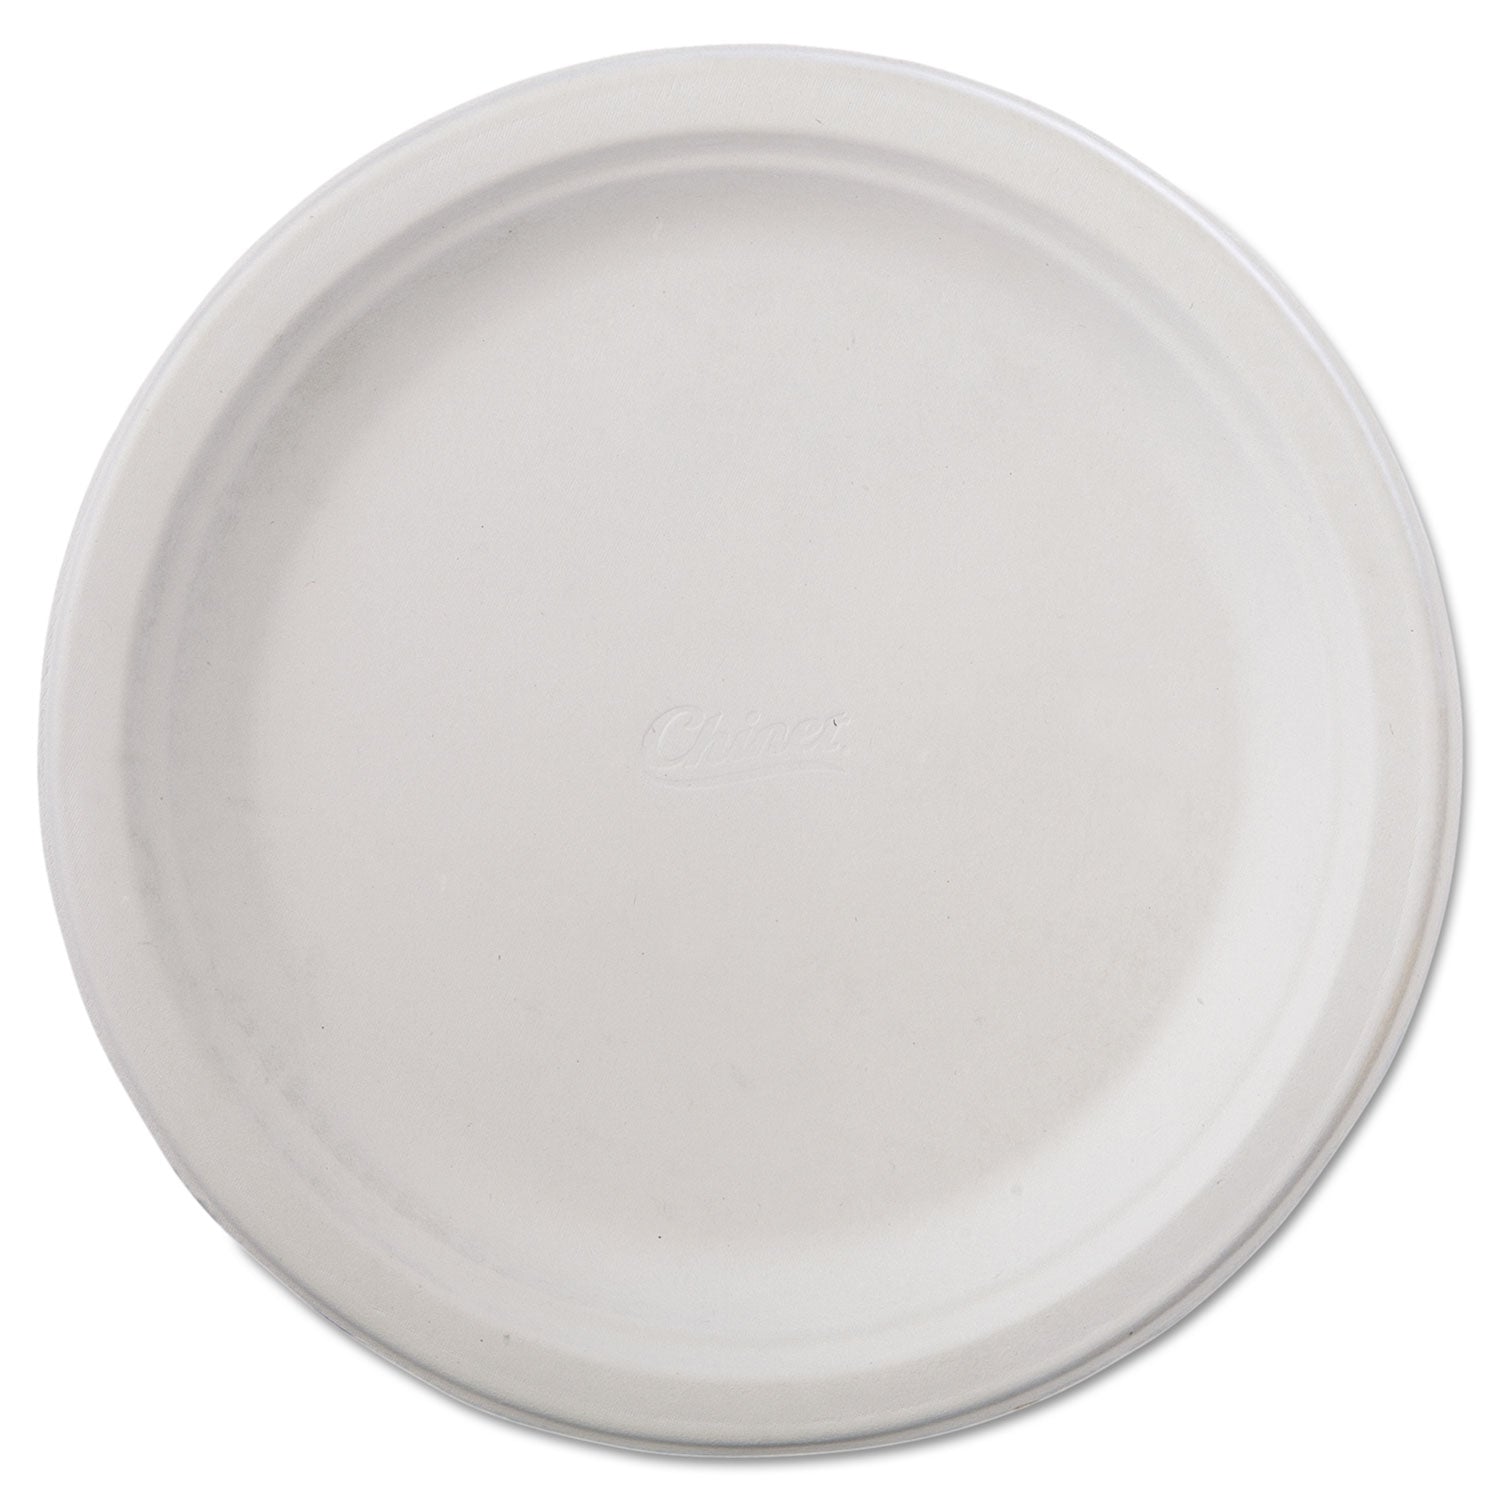 Classic Paper Dinnerware, Plate, 9.75" dia, White, 125/Pack, 4 Packs/Carton - 